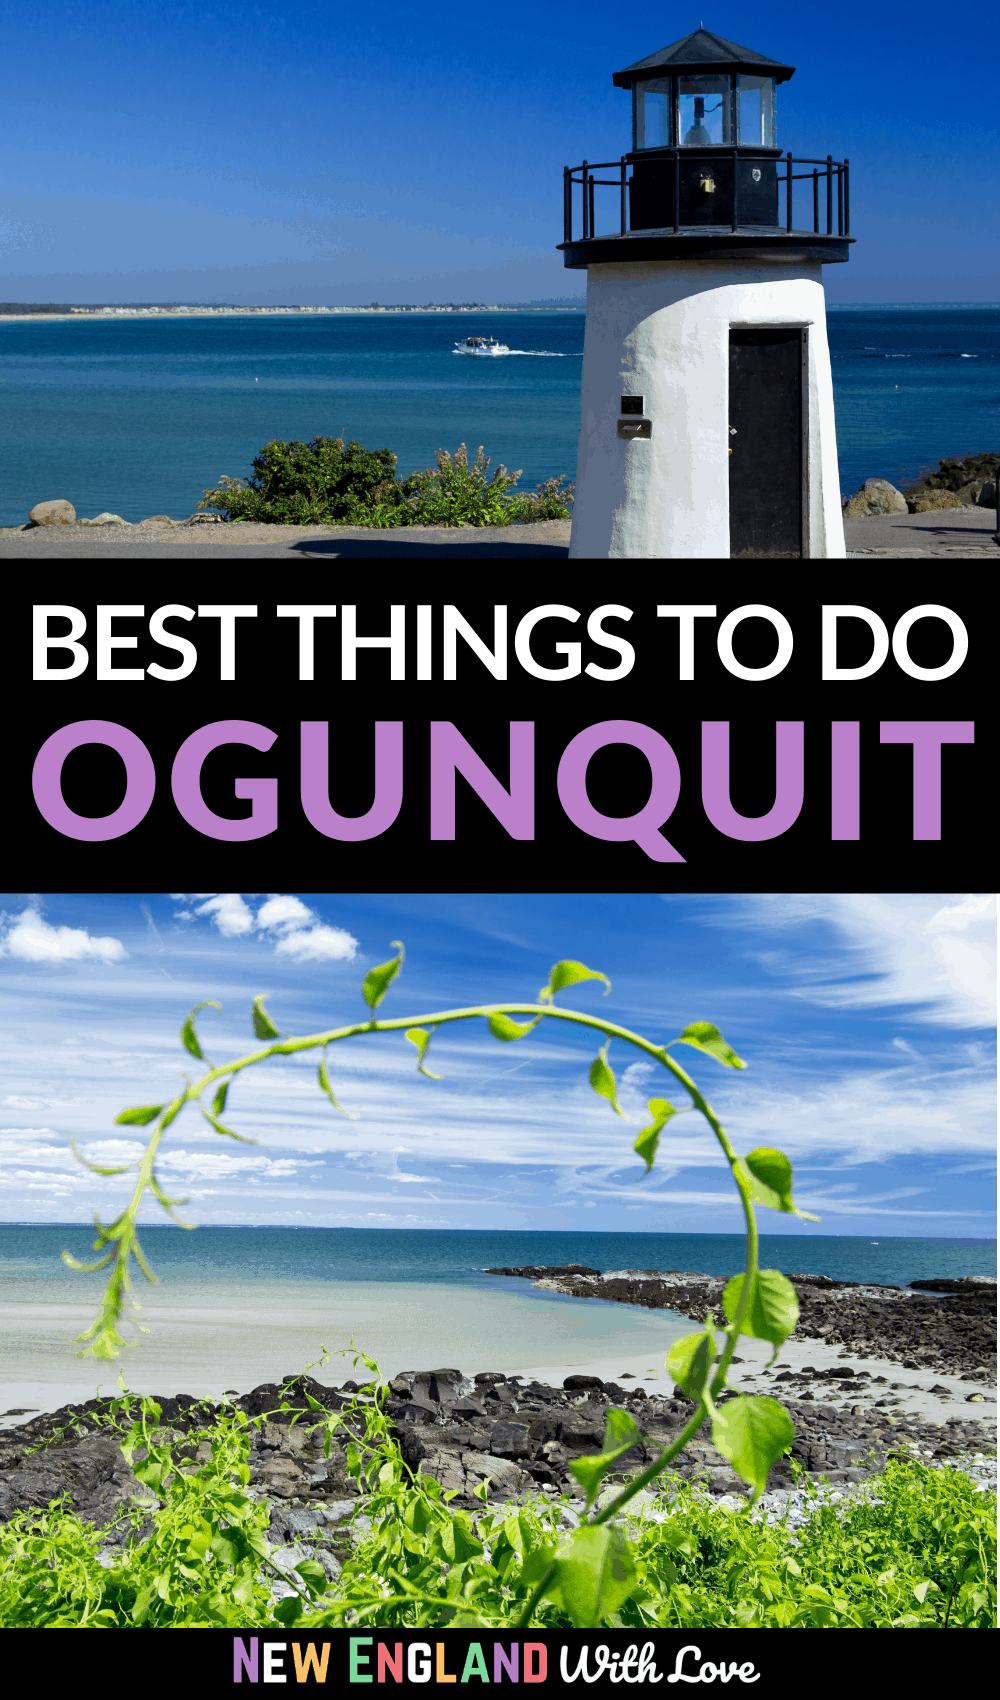 Pinterest graphic reading "BEST THINGS TO DO OGUNQUIT"